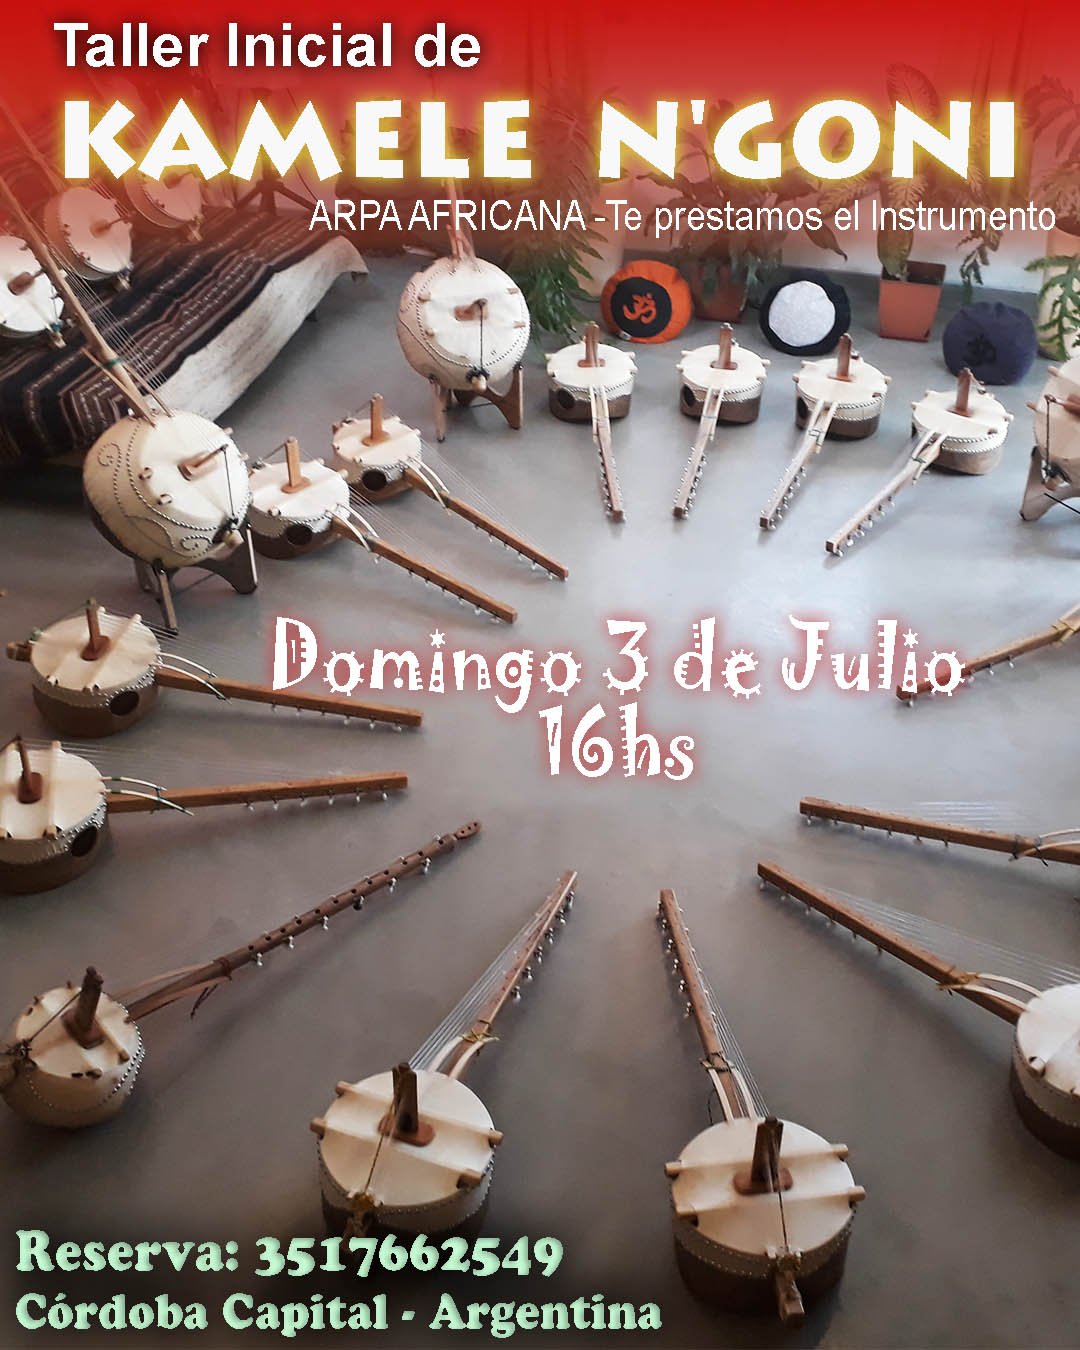 Taller Inicial de KAMELE NGONI 2022 - Córdoba